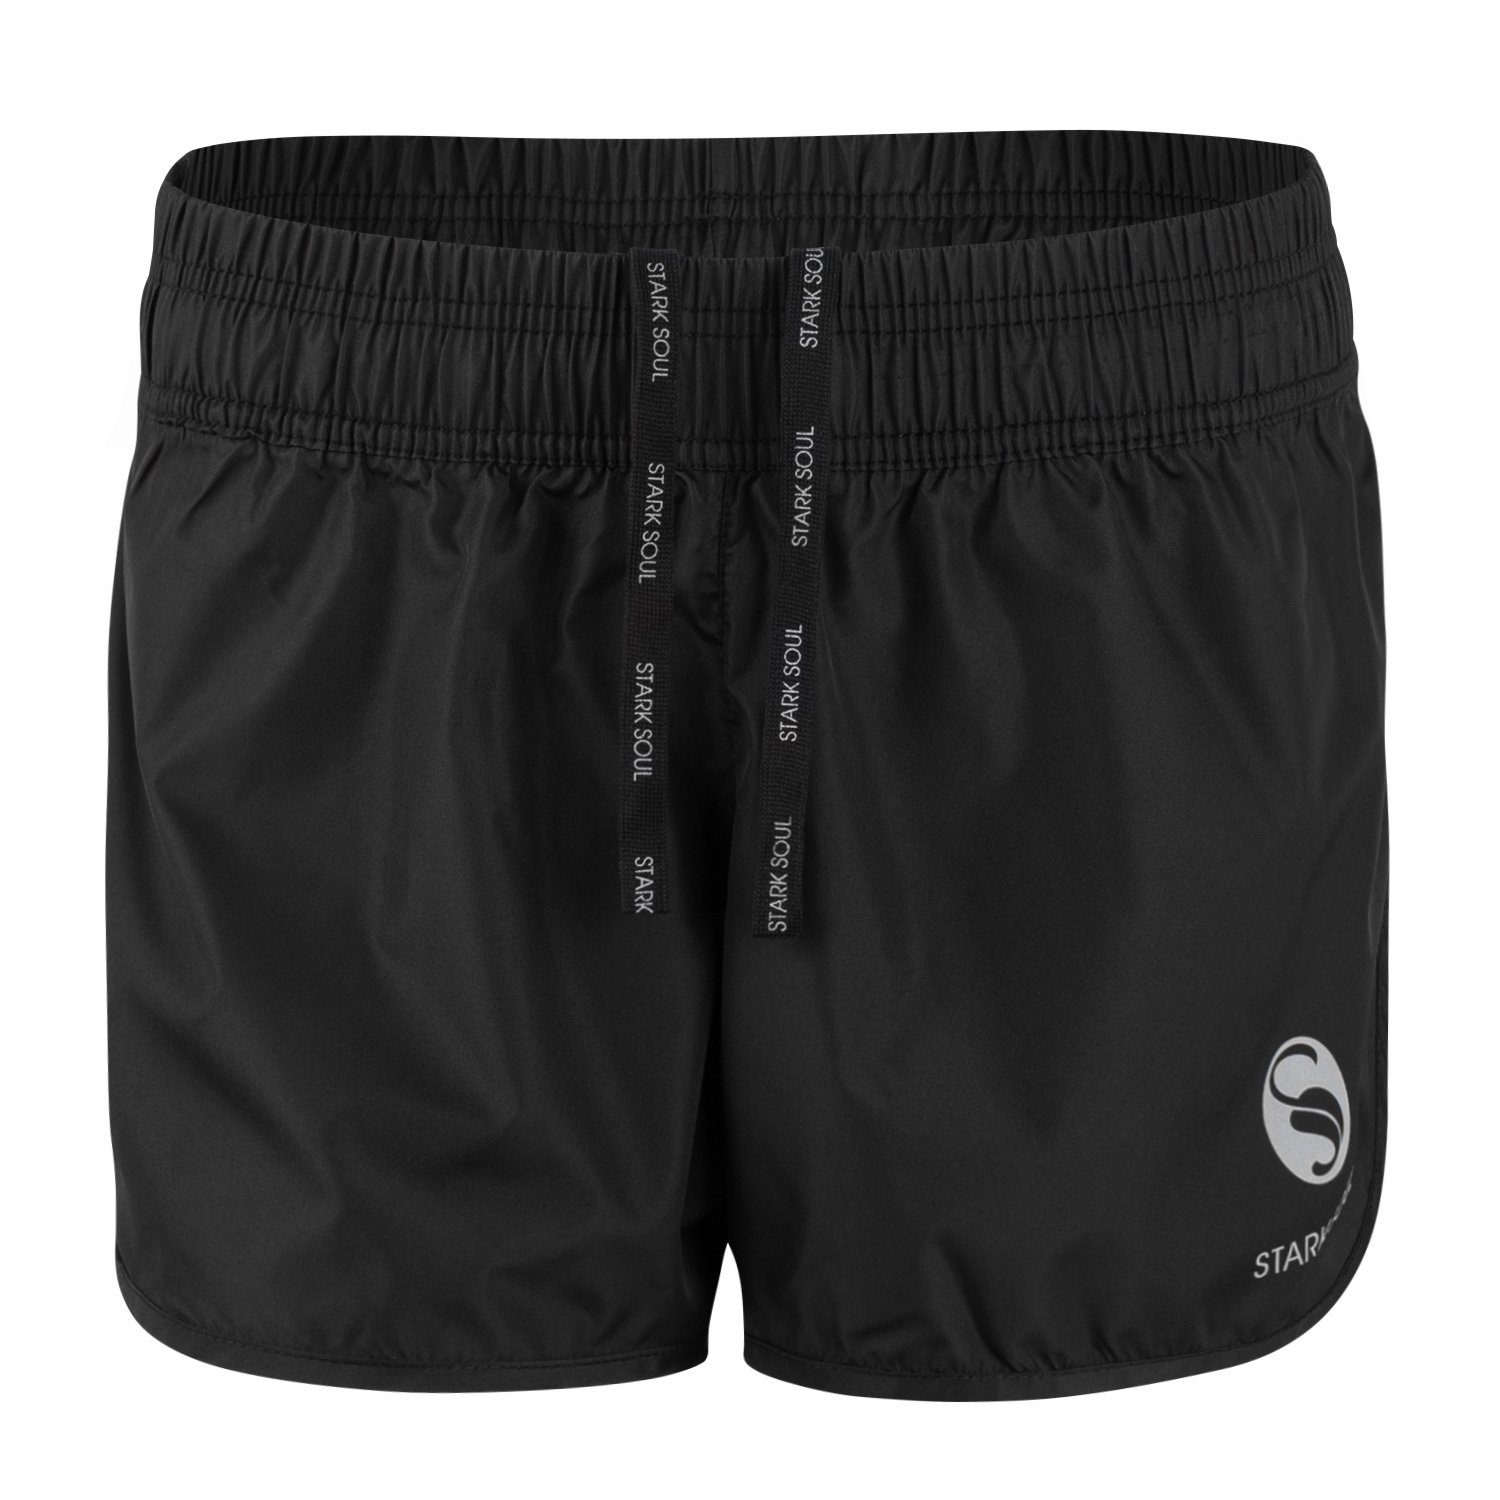 Stark Soul® Sporthose Sport Short - kurze Sporthose aus Quick Dry Material - Schnelltrocknend Schwarz